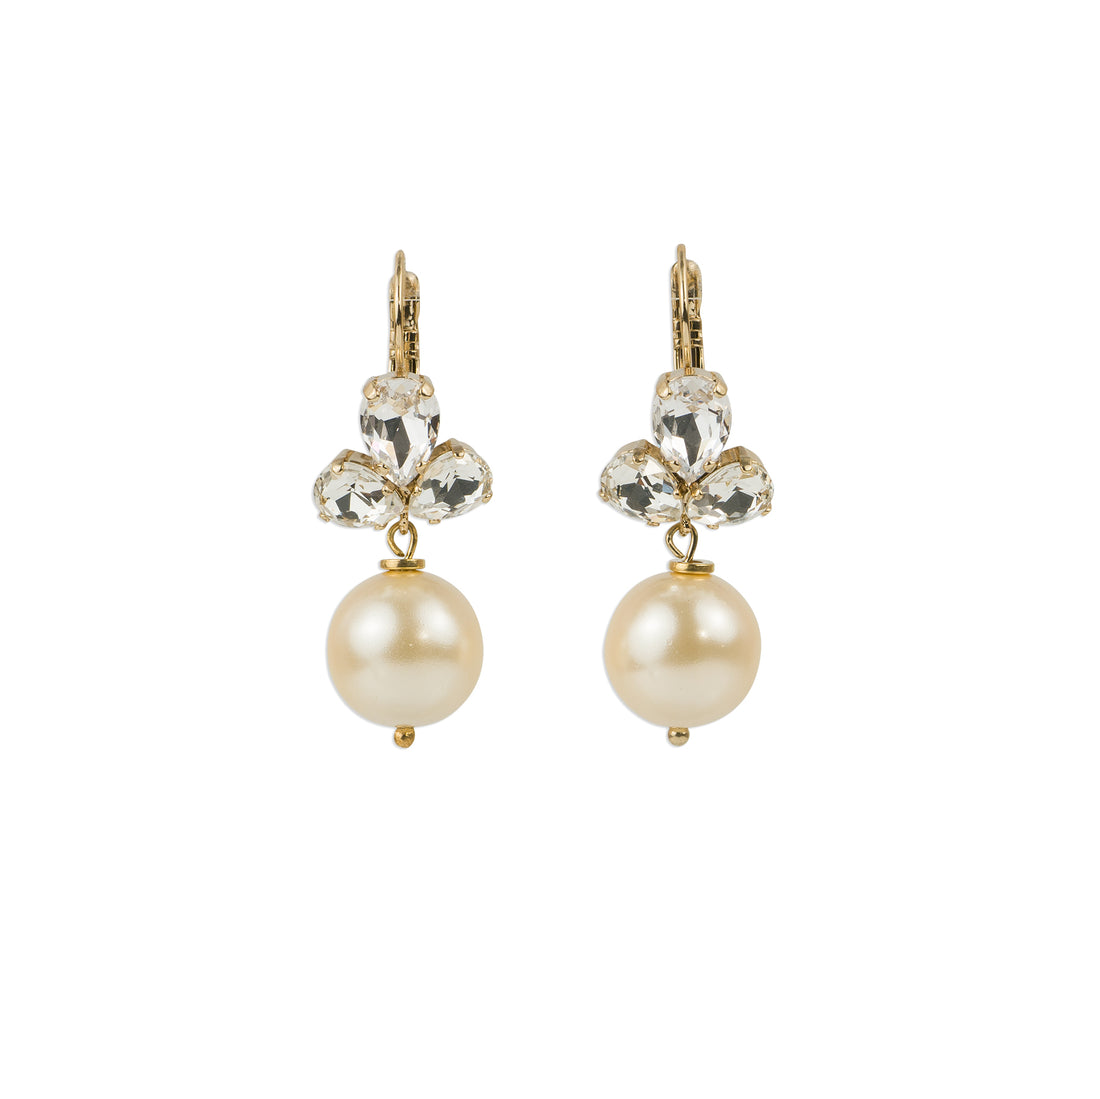 Dangle earrings with pearls